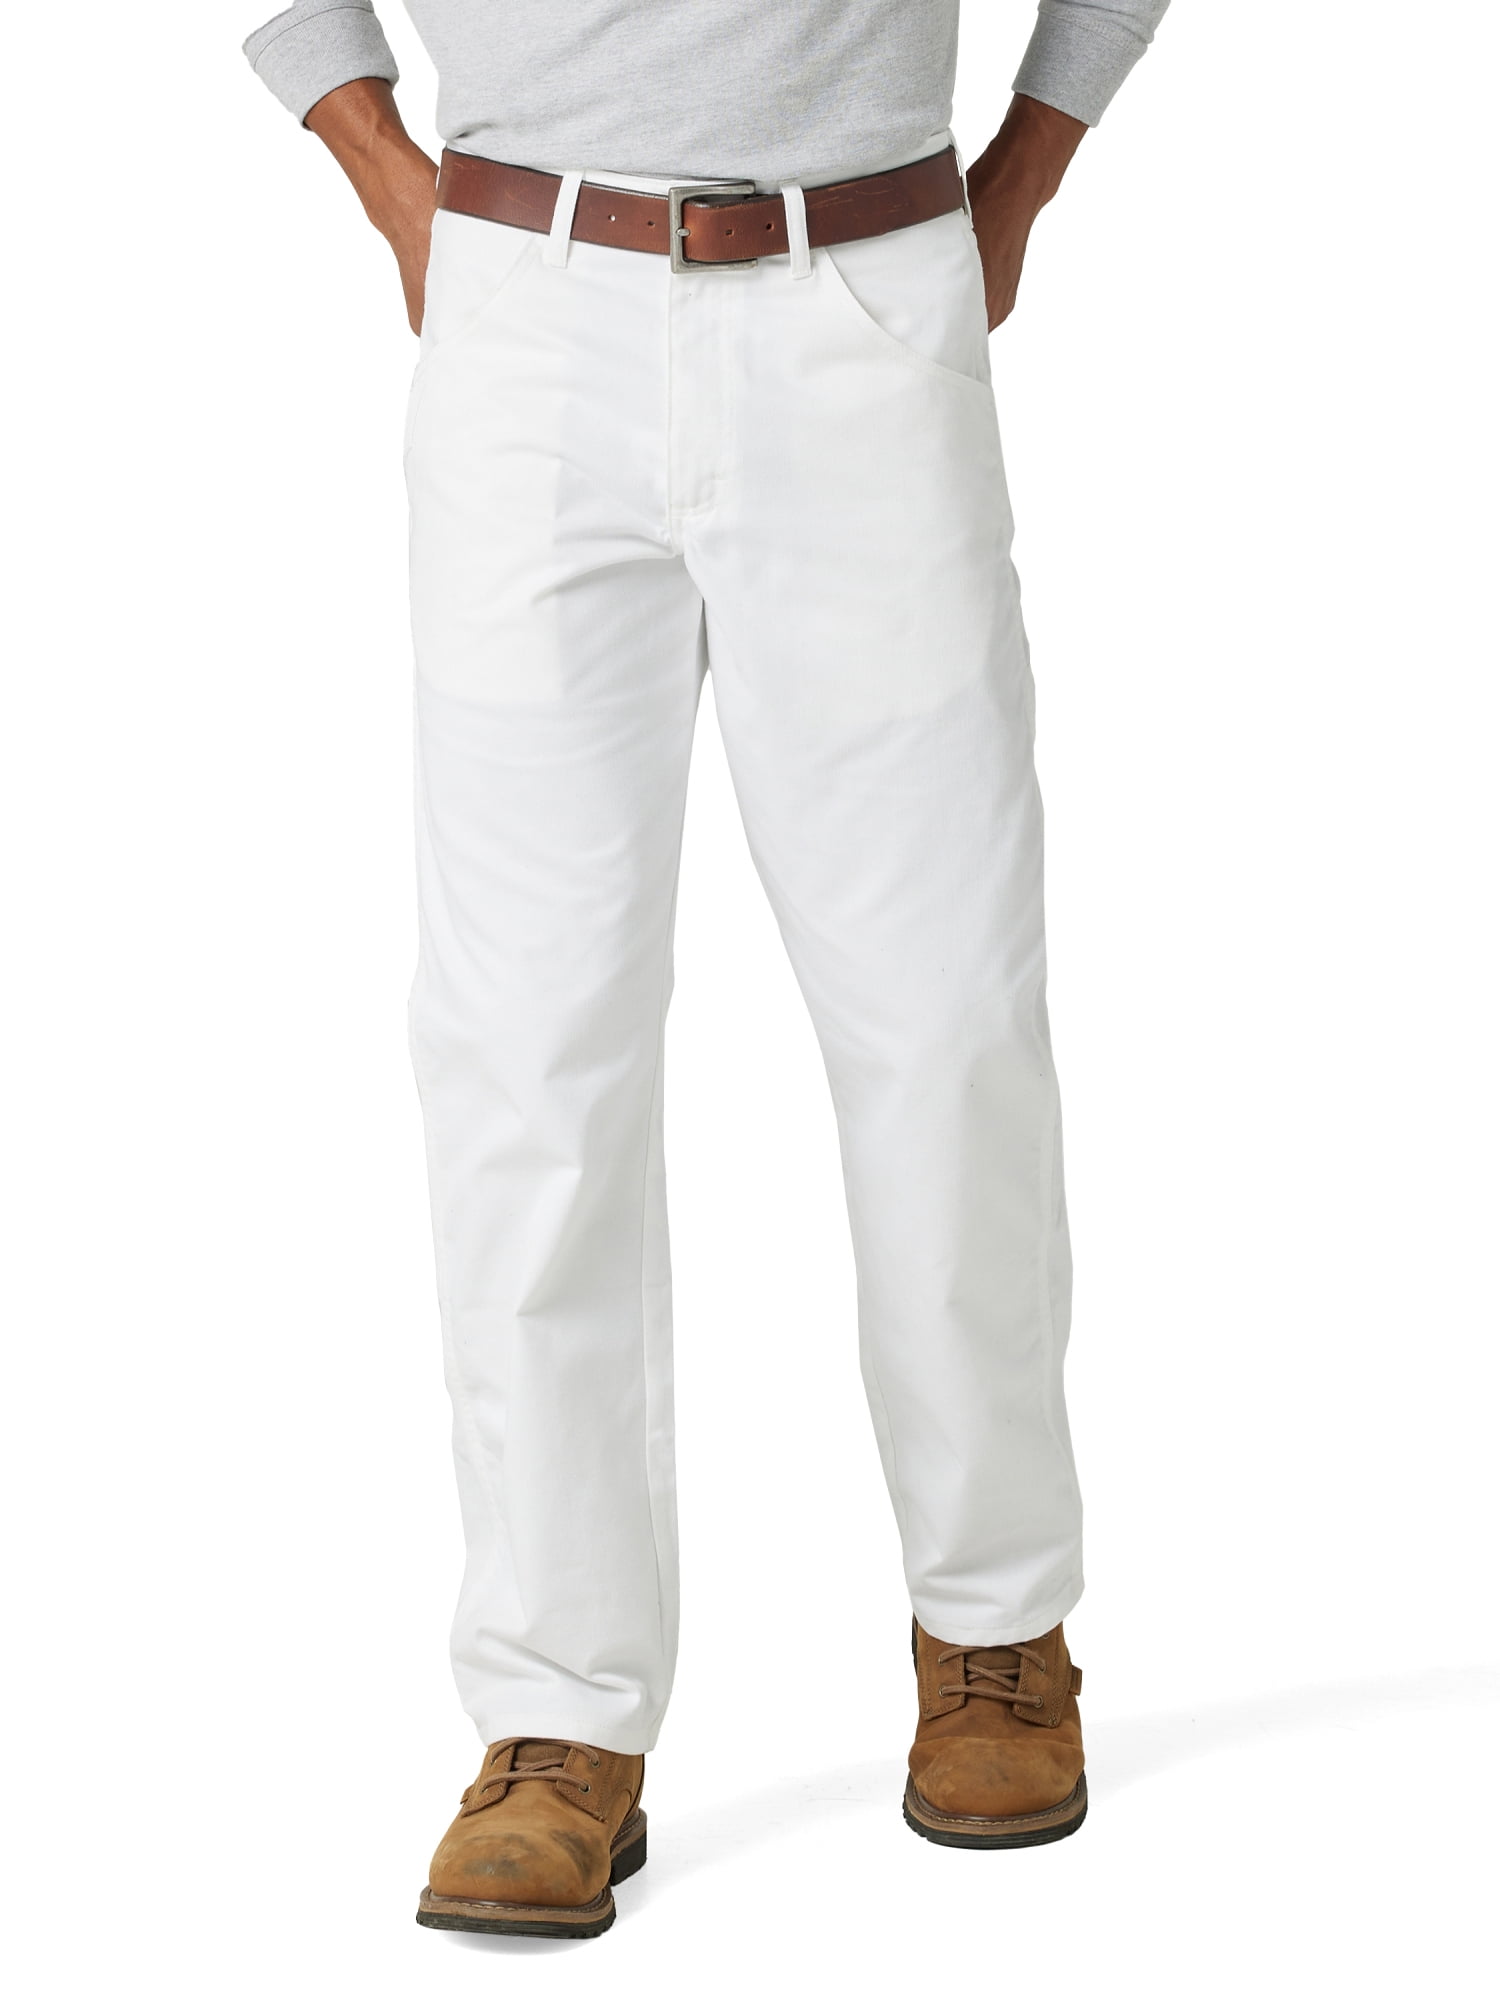 Men's Wrangler Workwear Painter Pant, Sizes 32-44 - Walmart.com